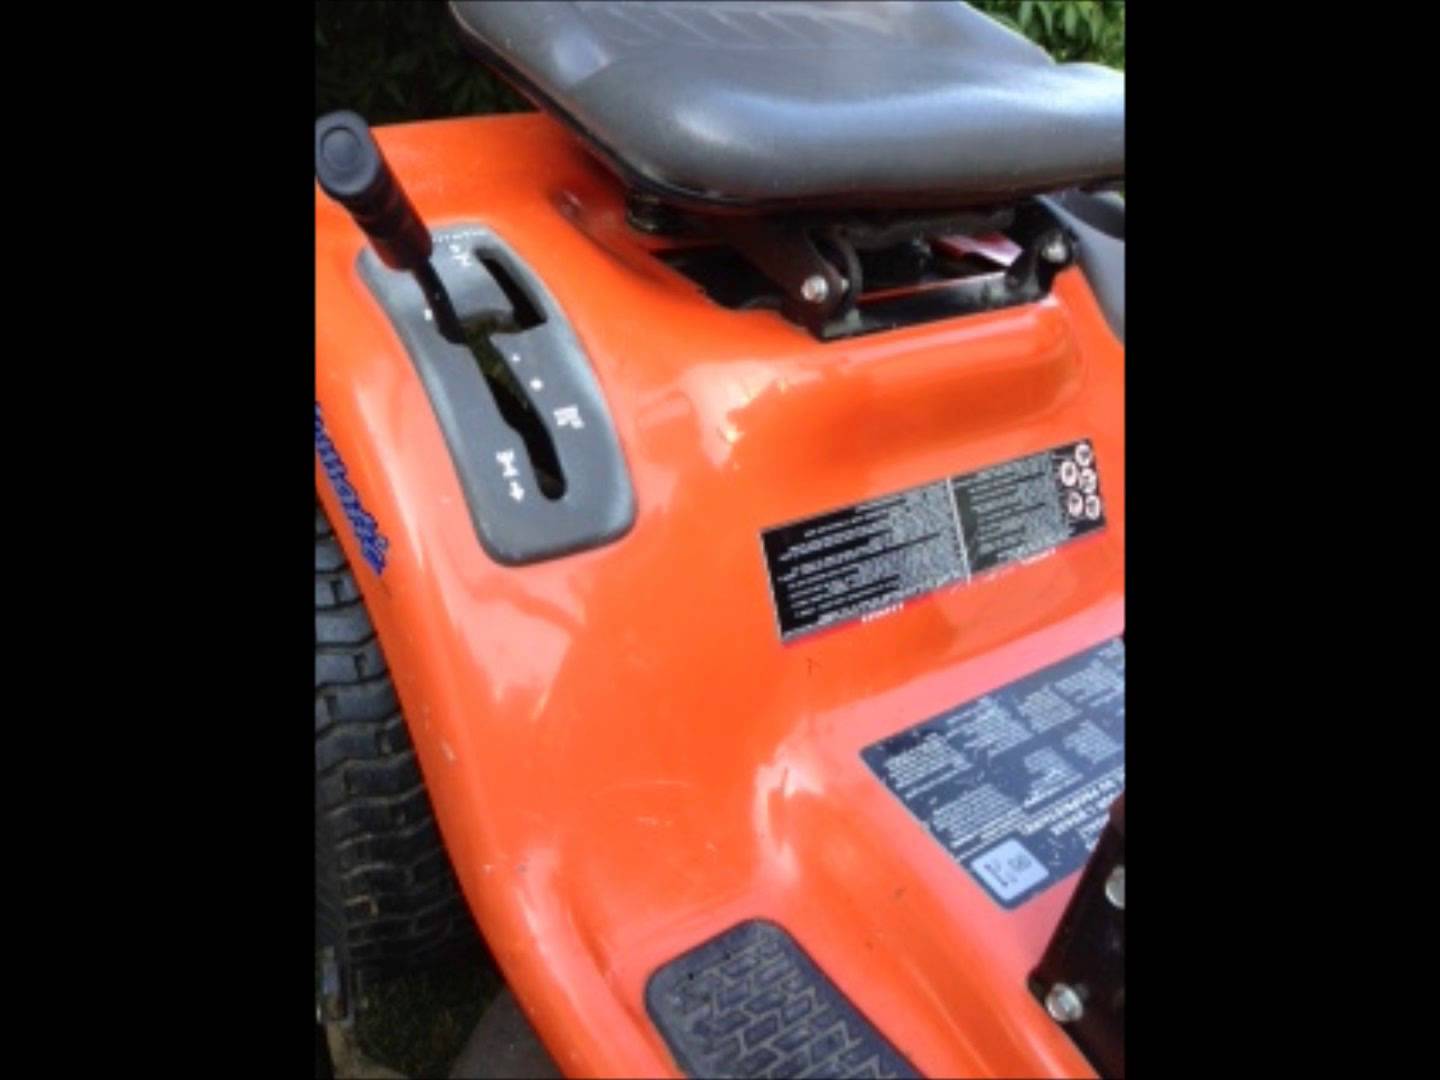 Husqvarna YTH150 lawn and garden tractor - YouTube